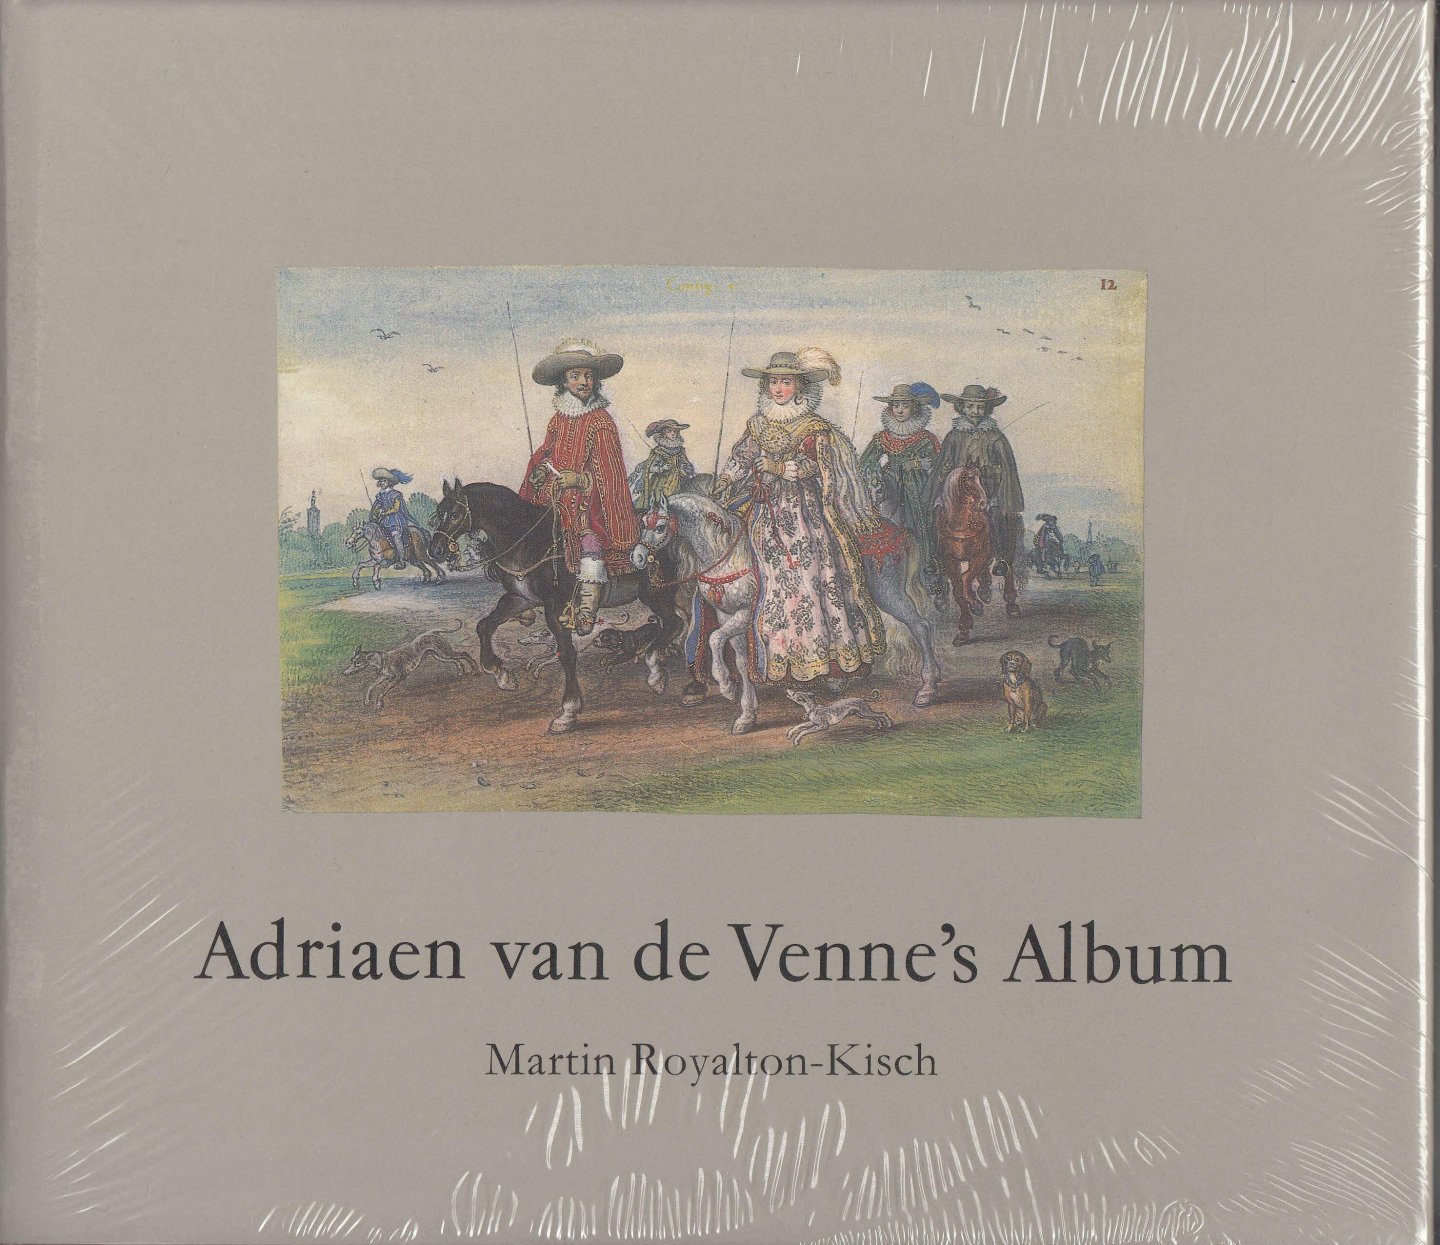 Royalton-Kisch, Martin - Adriaen van de Venne's album in the Department of Prints and Drawings in the British Museum